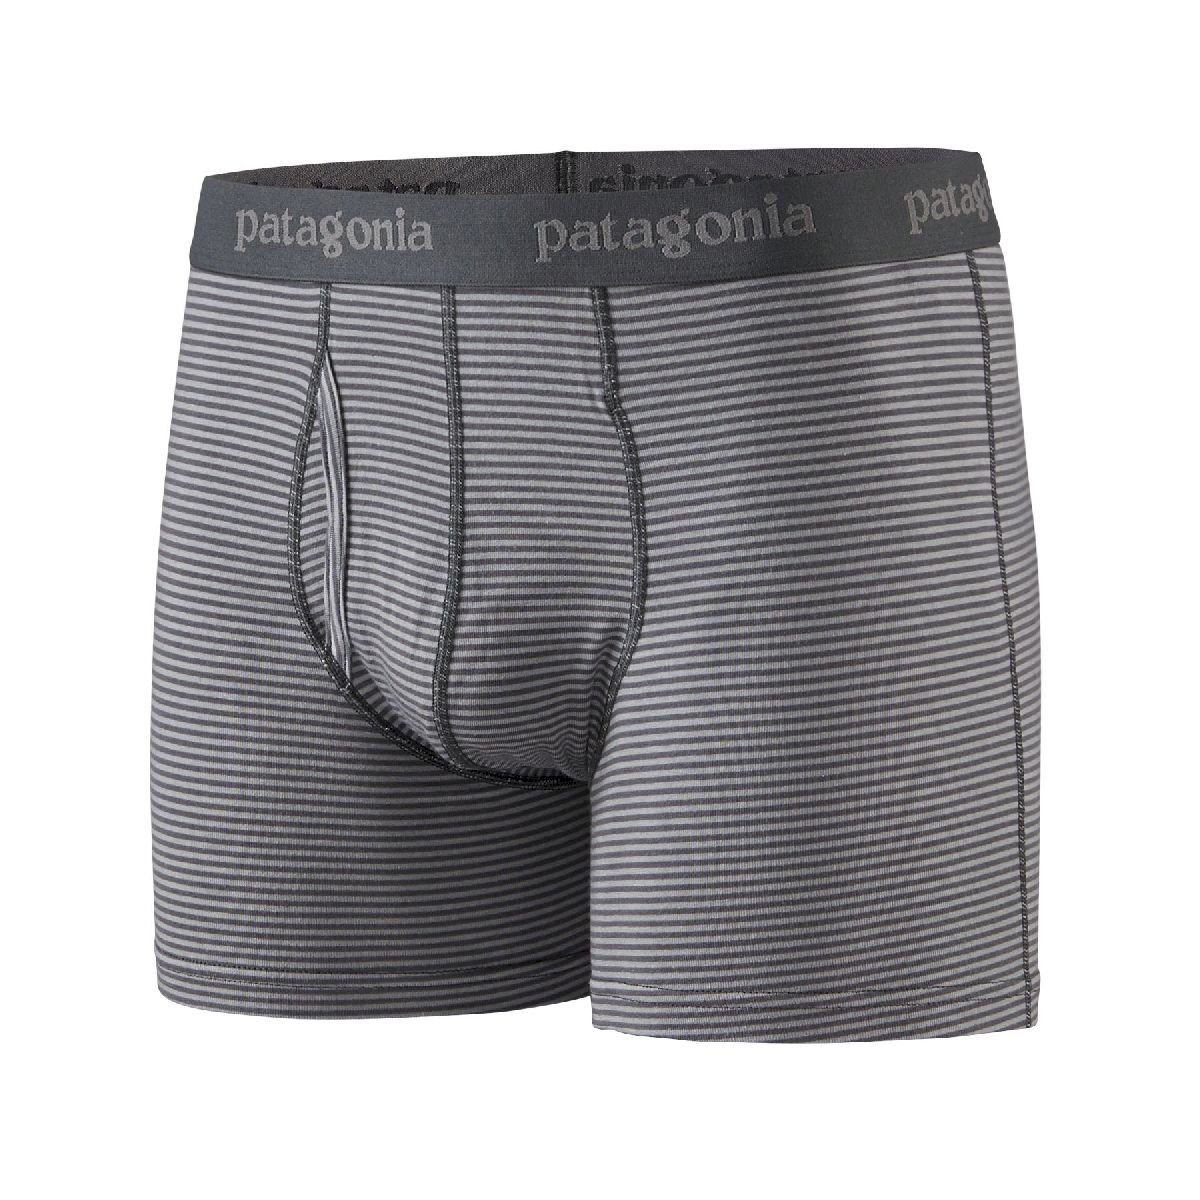 Patagonia Essential Boxer Briefs - 3" - Underbyxa